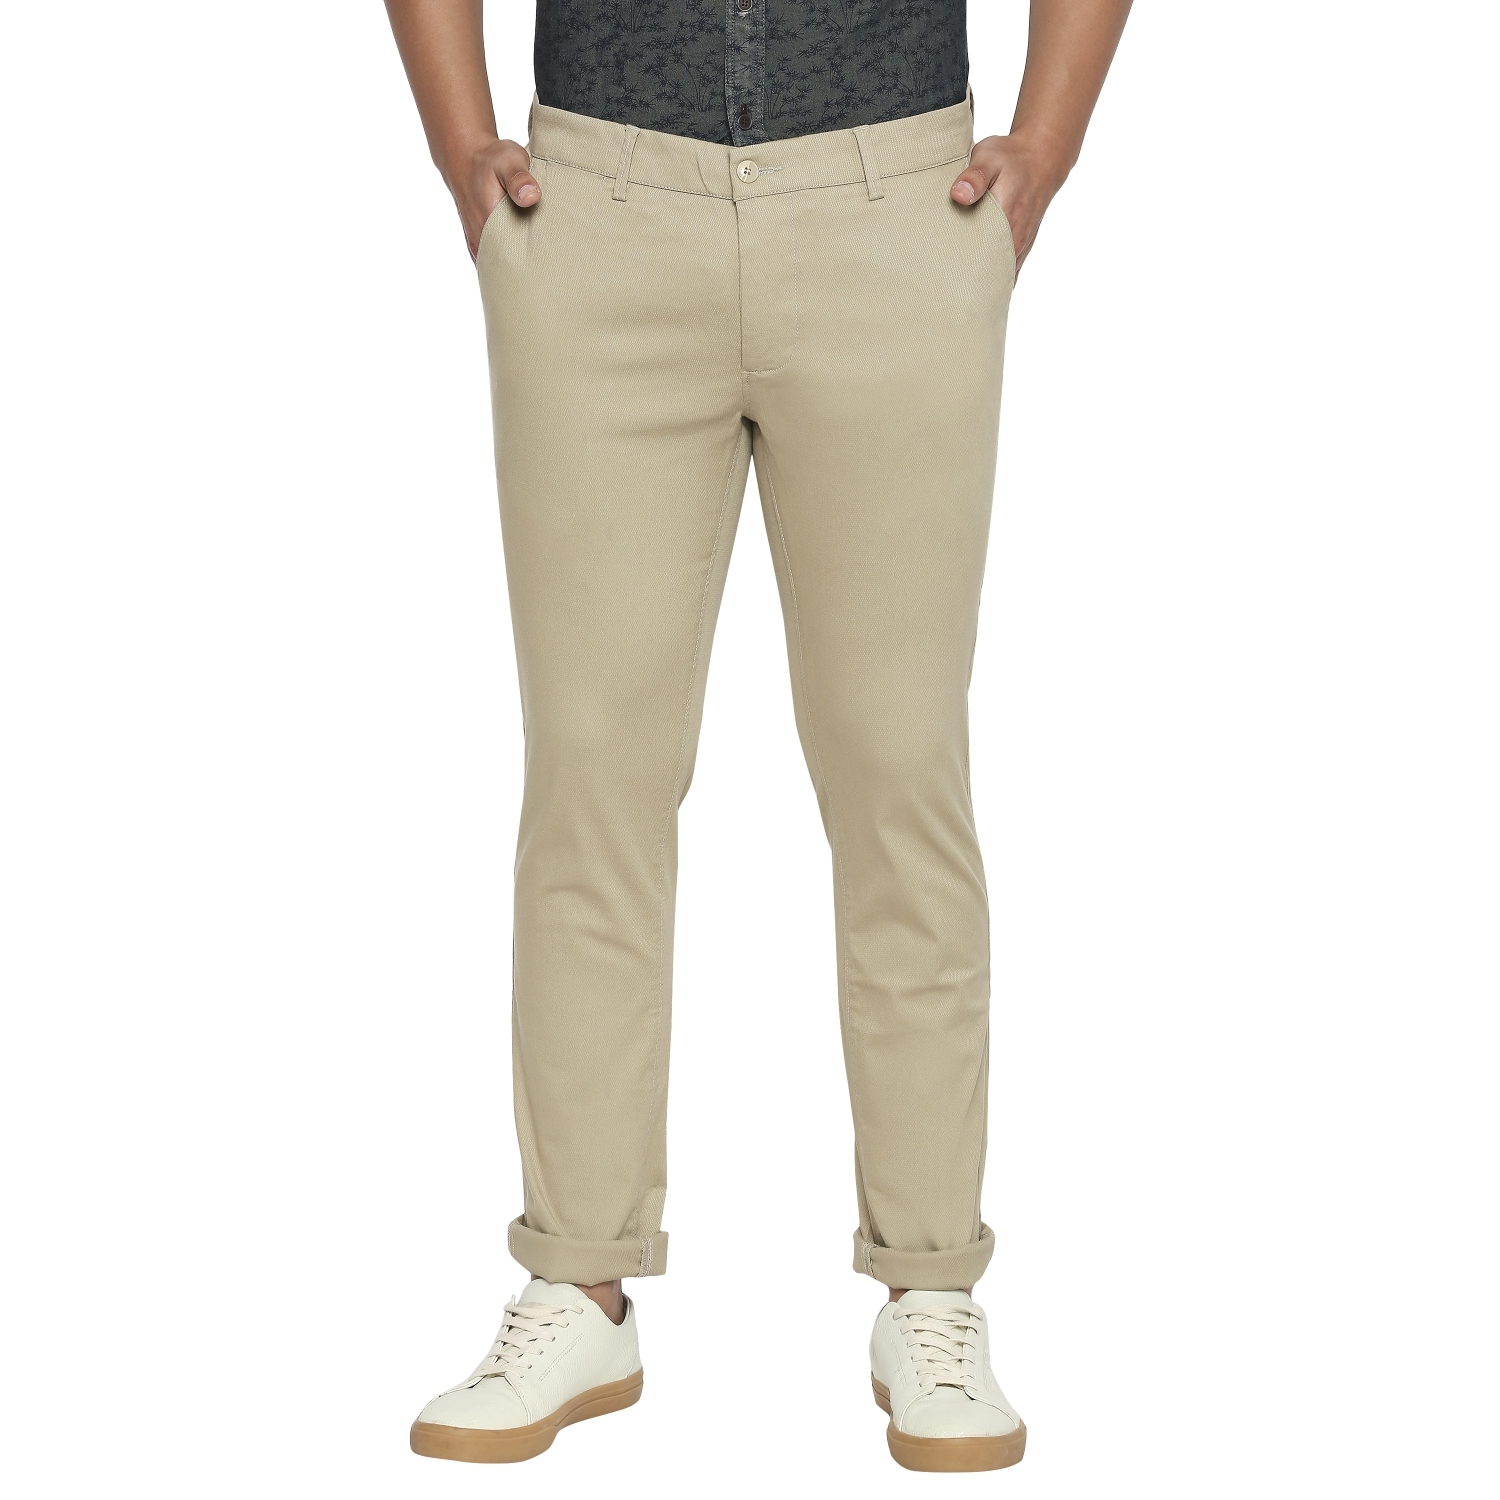 Basics | Basics Tapered Fit Pale Khaki Stretch Trouser